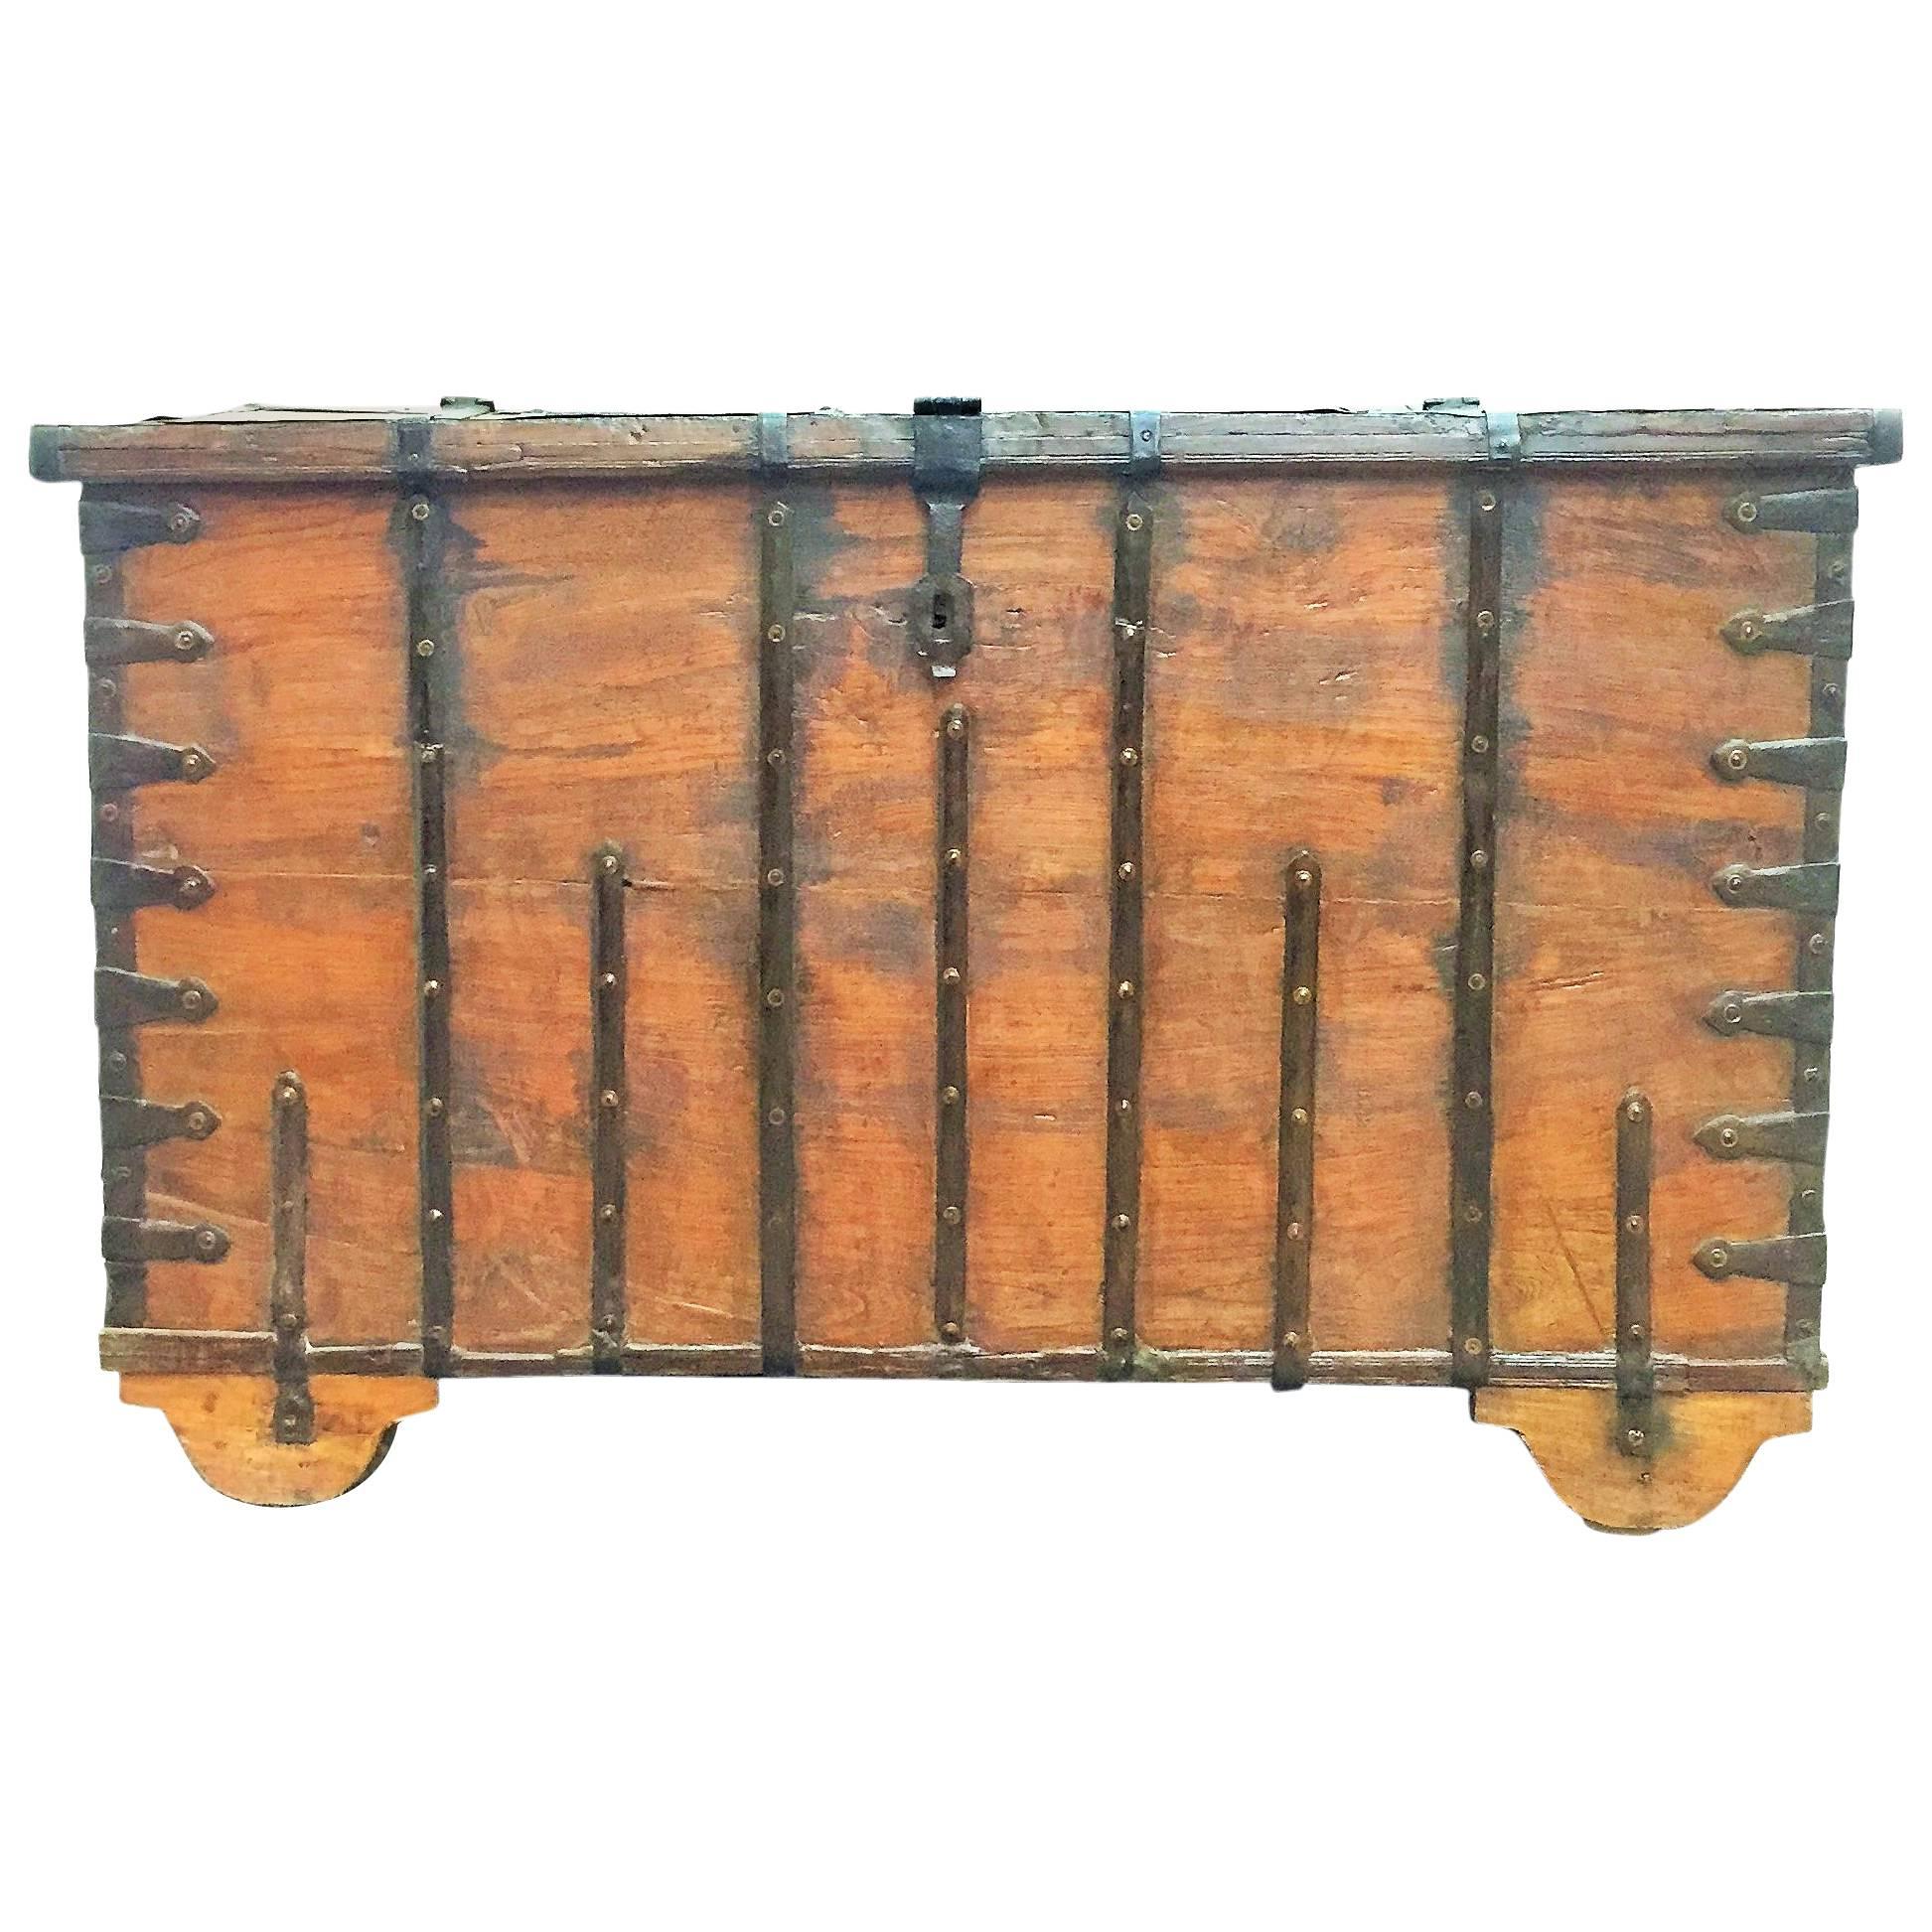 Seltener Eichenholz-Koffer / Truhe aus dem 17. Jahrhundert